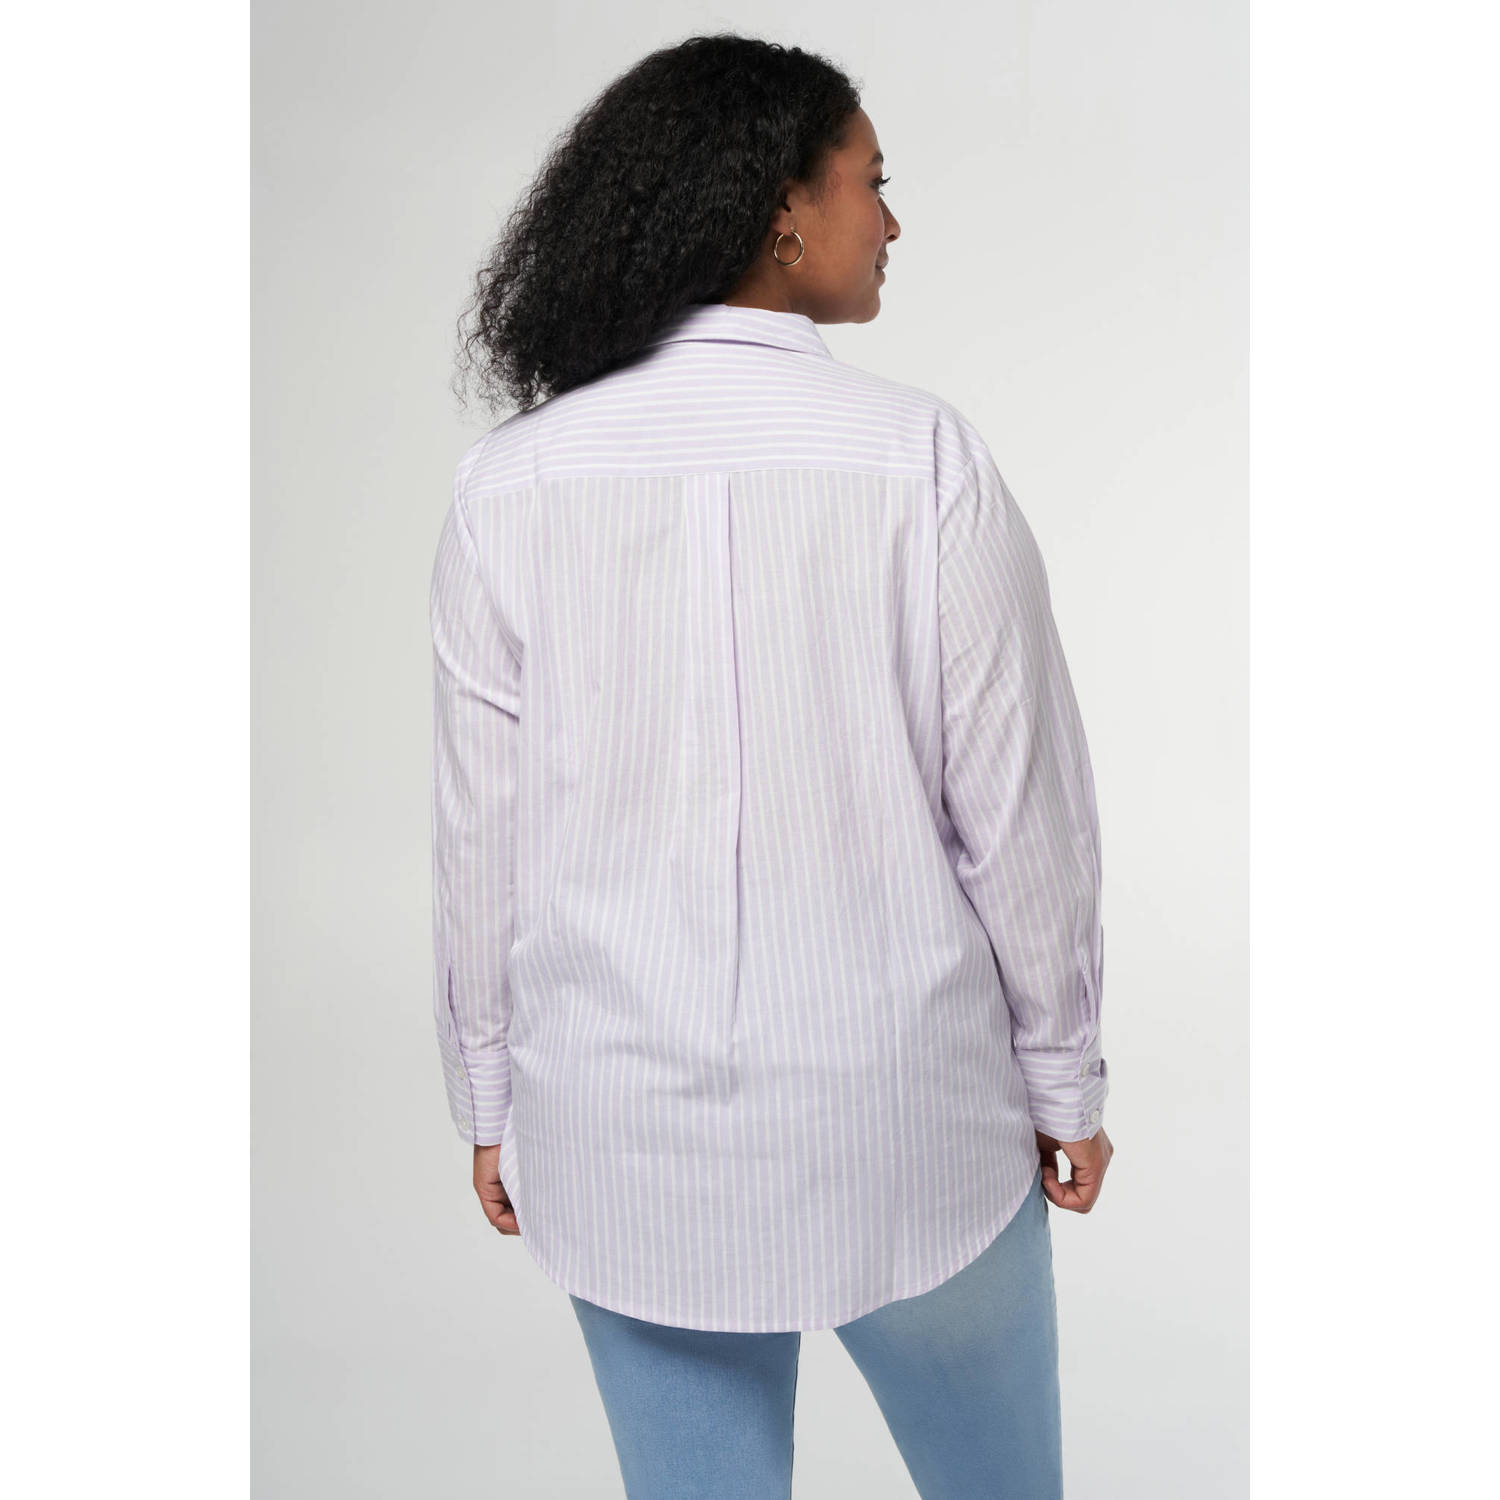 MS Mode gestreepte blouse lila wit